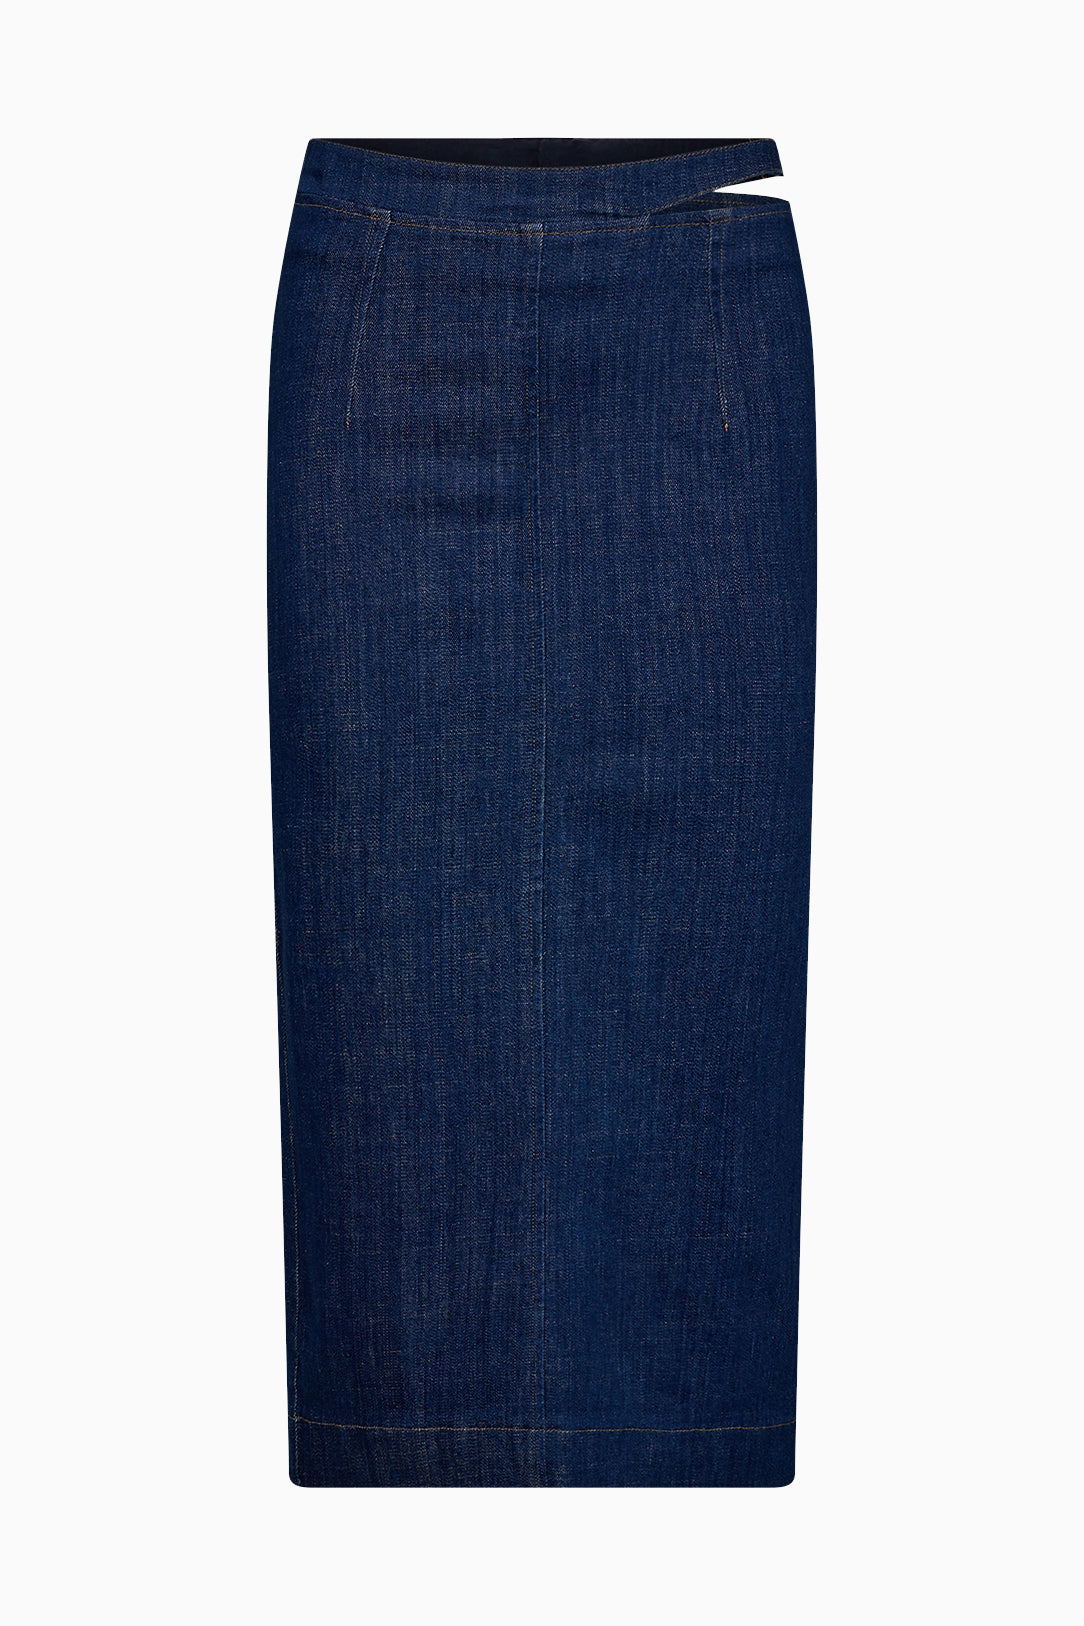 Tomorrow TMRW Brown Stitch Skirt - Crude Indigo Skirt 51 Denim Blue